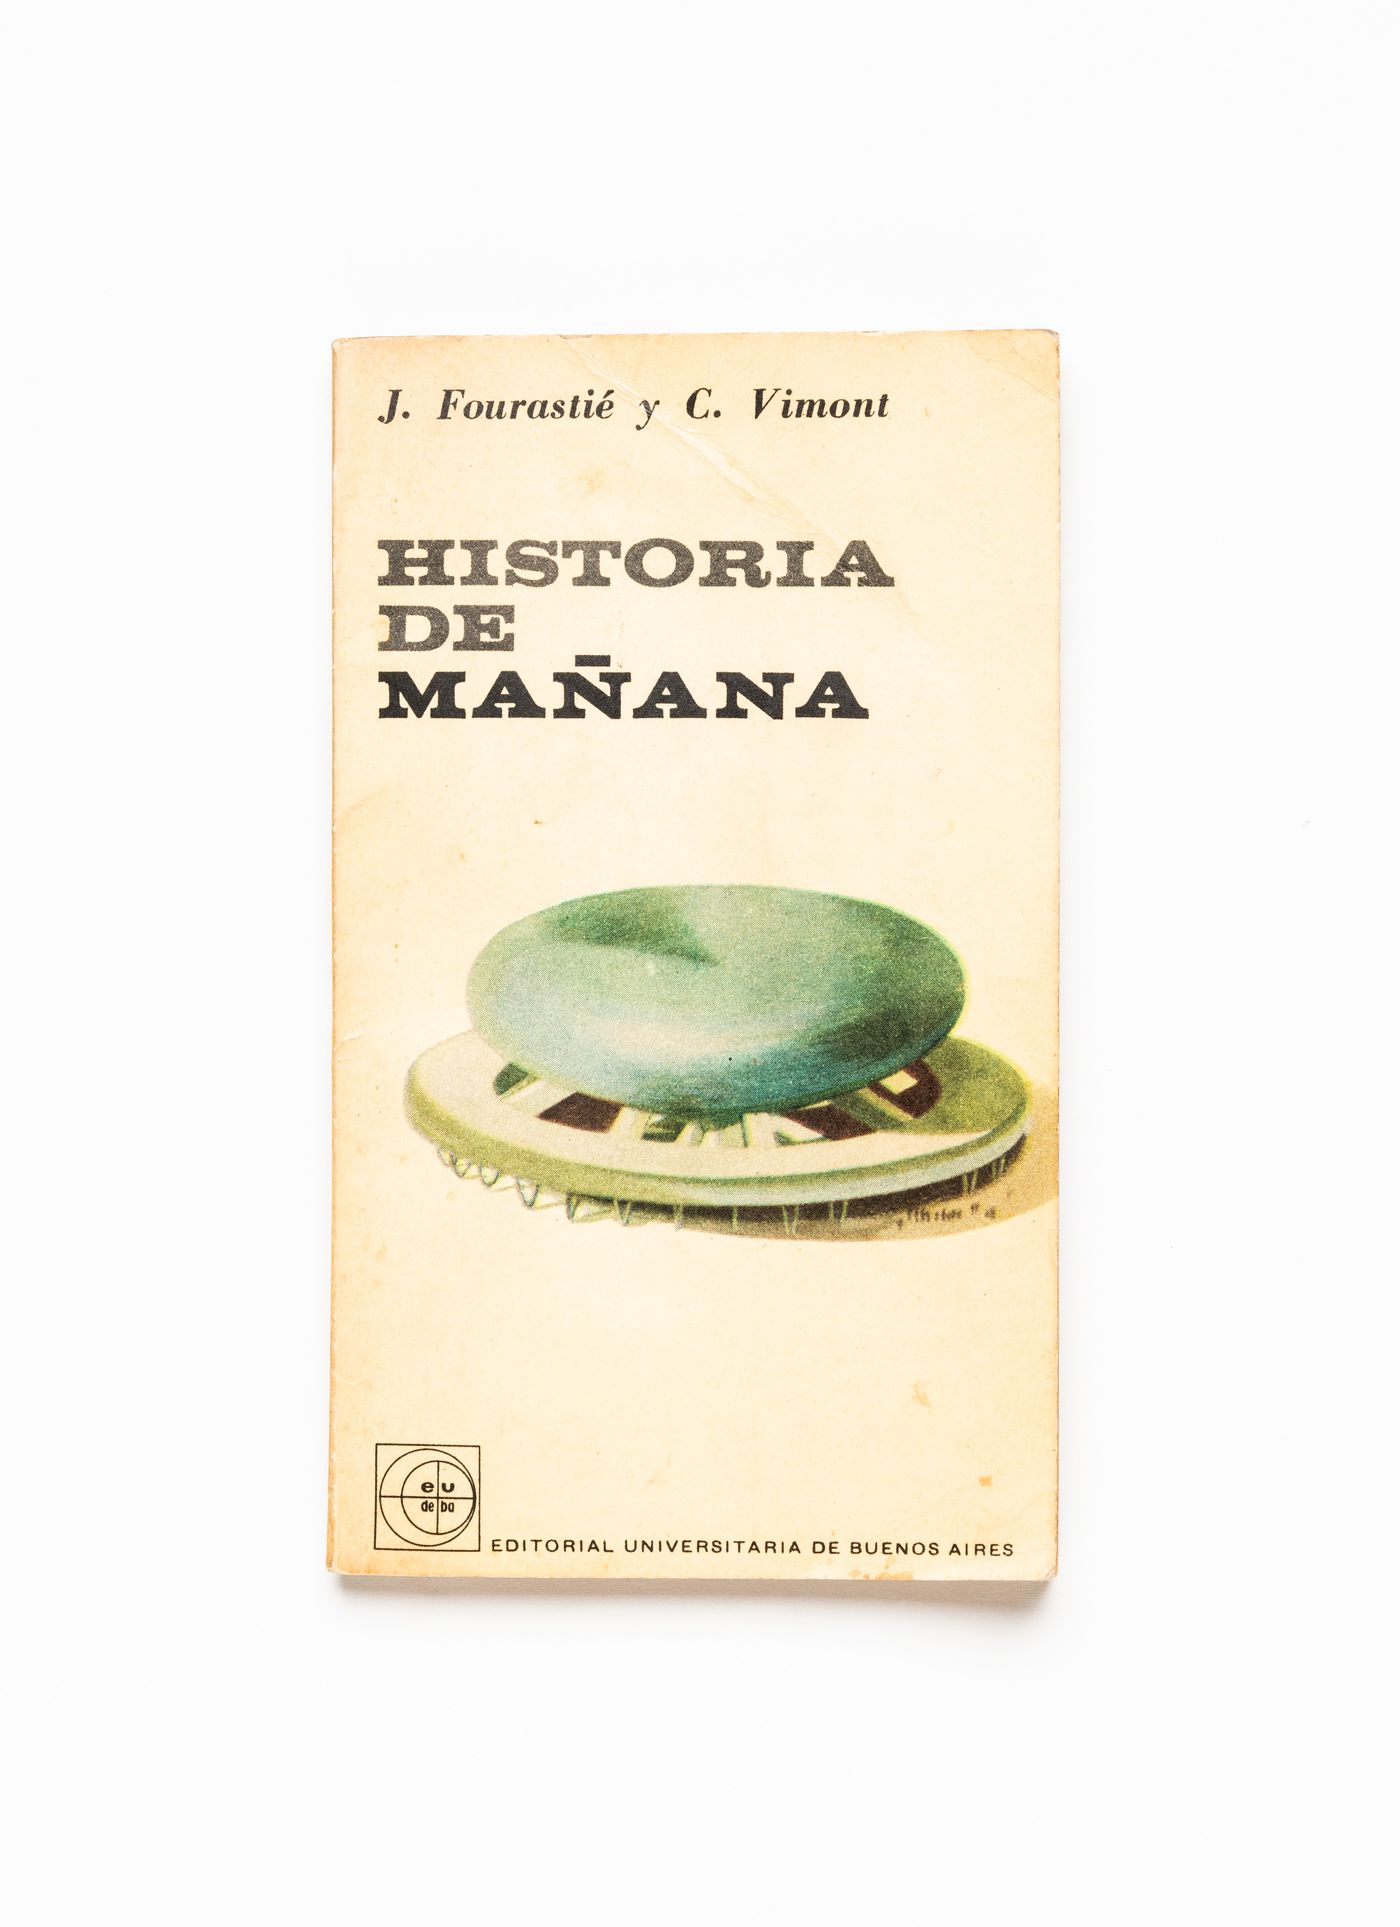 Book "Historia de mañana" by J. Fourastié and C. Vimont